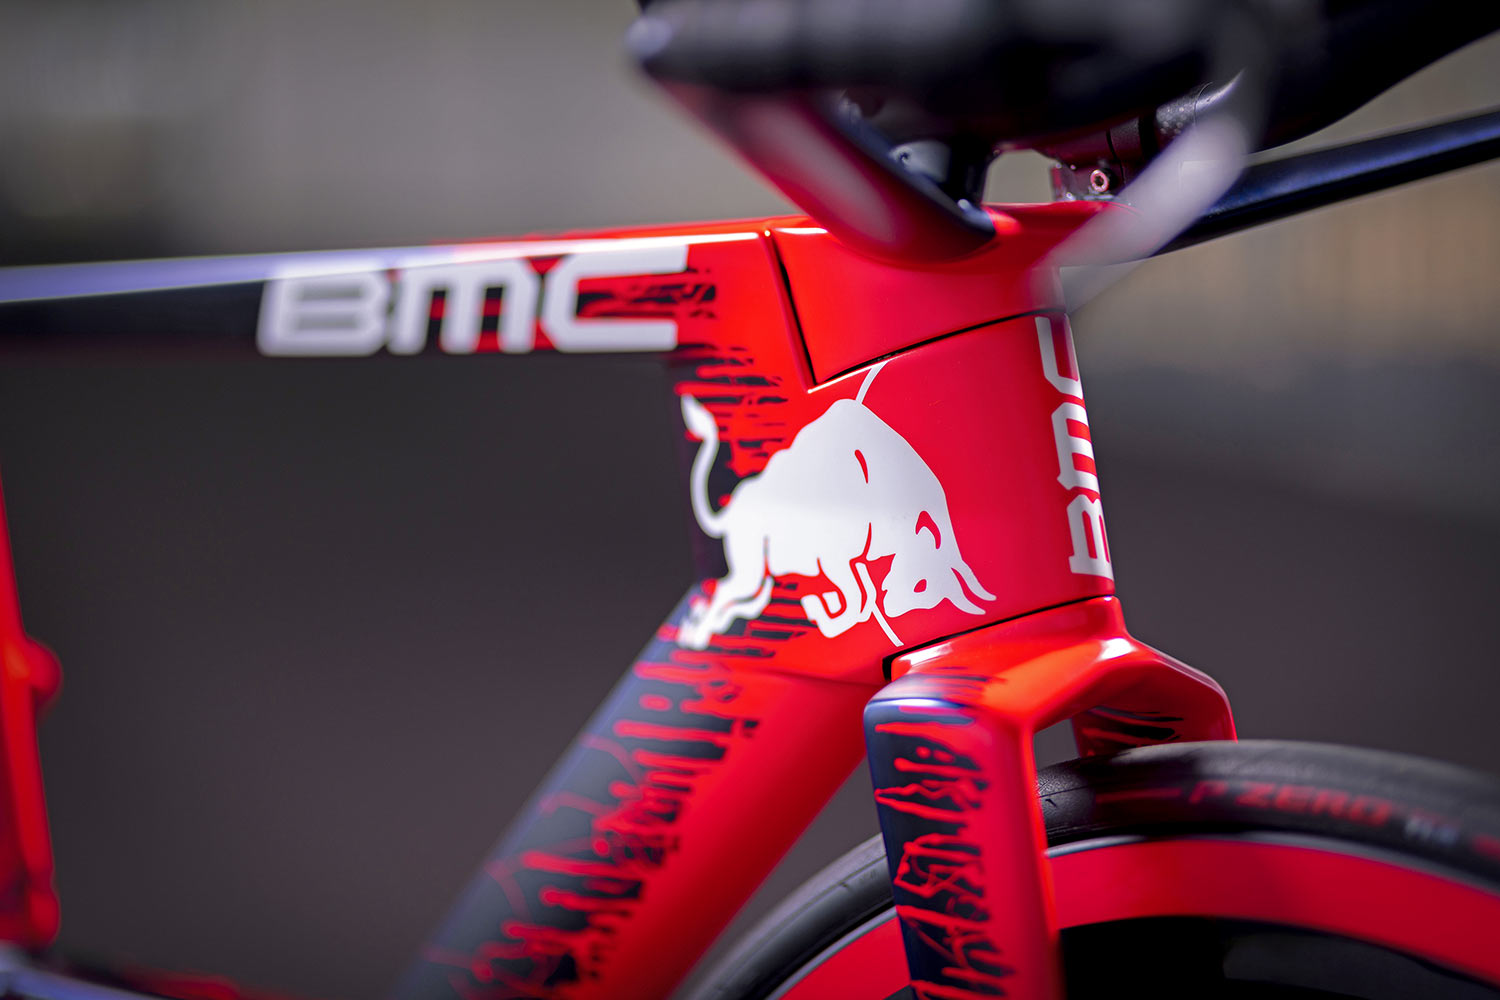 BMC Red Bull Speedmachine prototype, Worlds Fastest Race Bike time trial triathlon, integraetd headtube